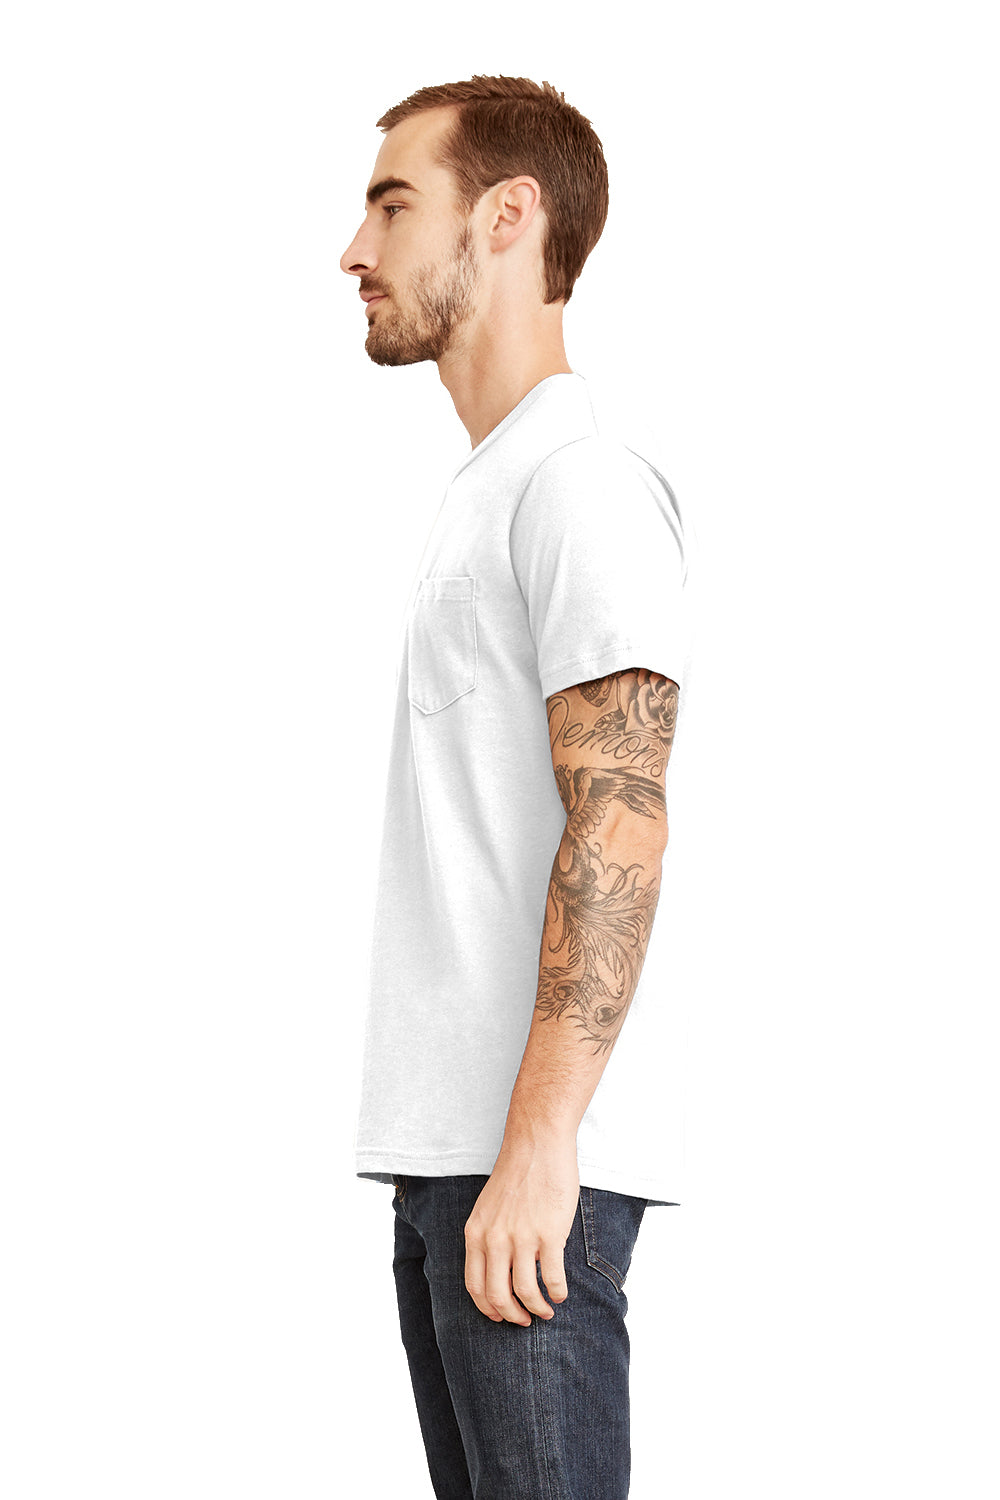 Next Level 3605 Mens Fine Jersey Short Sleeve Crewneck T-Shirt w/ Pocket White Side